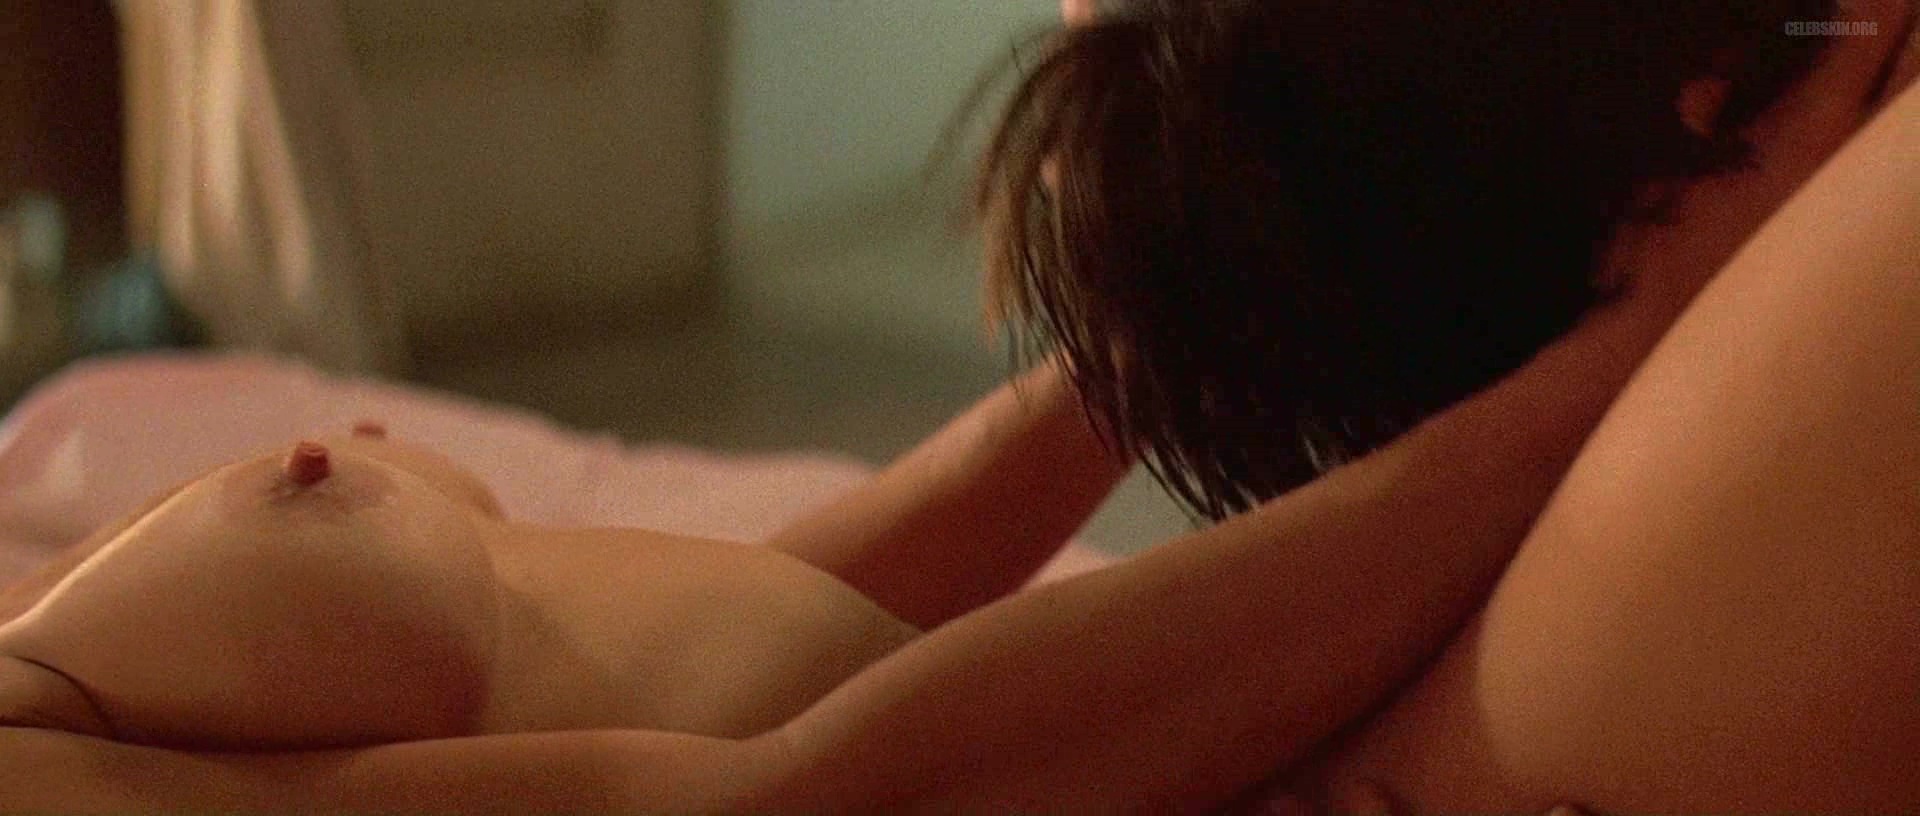 Naked Kim Basinger In The Getaway Ii